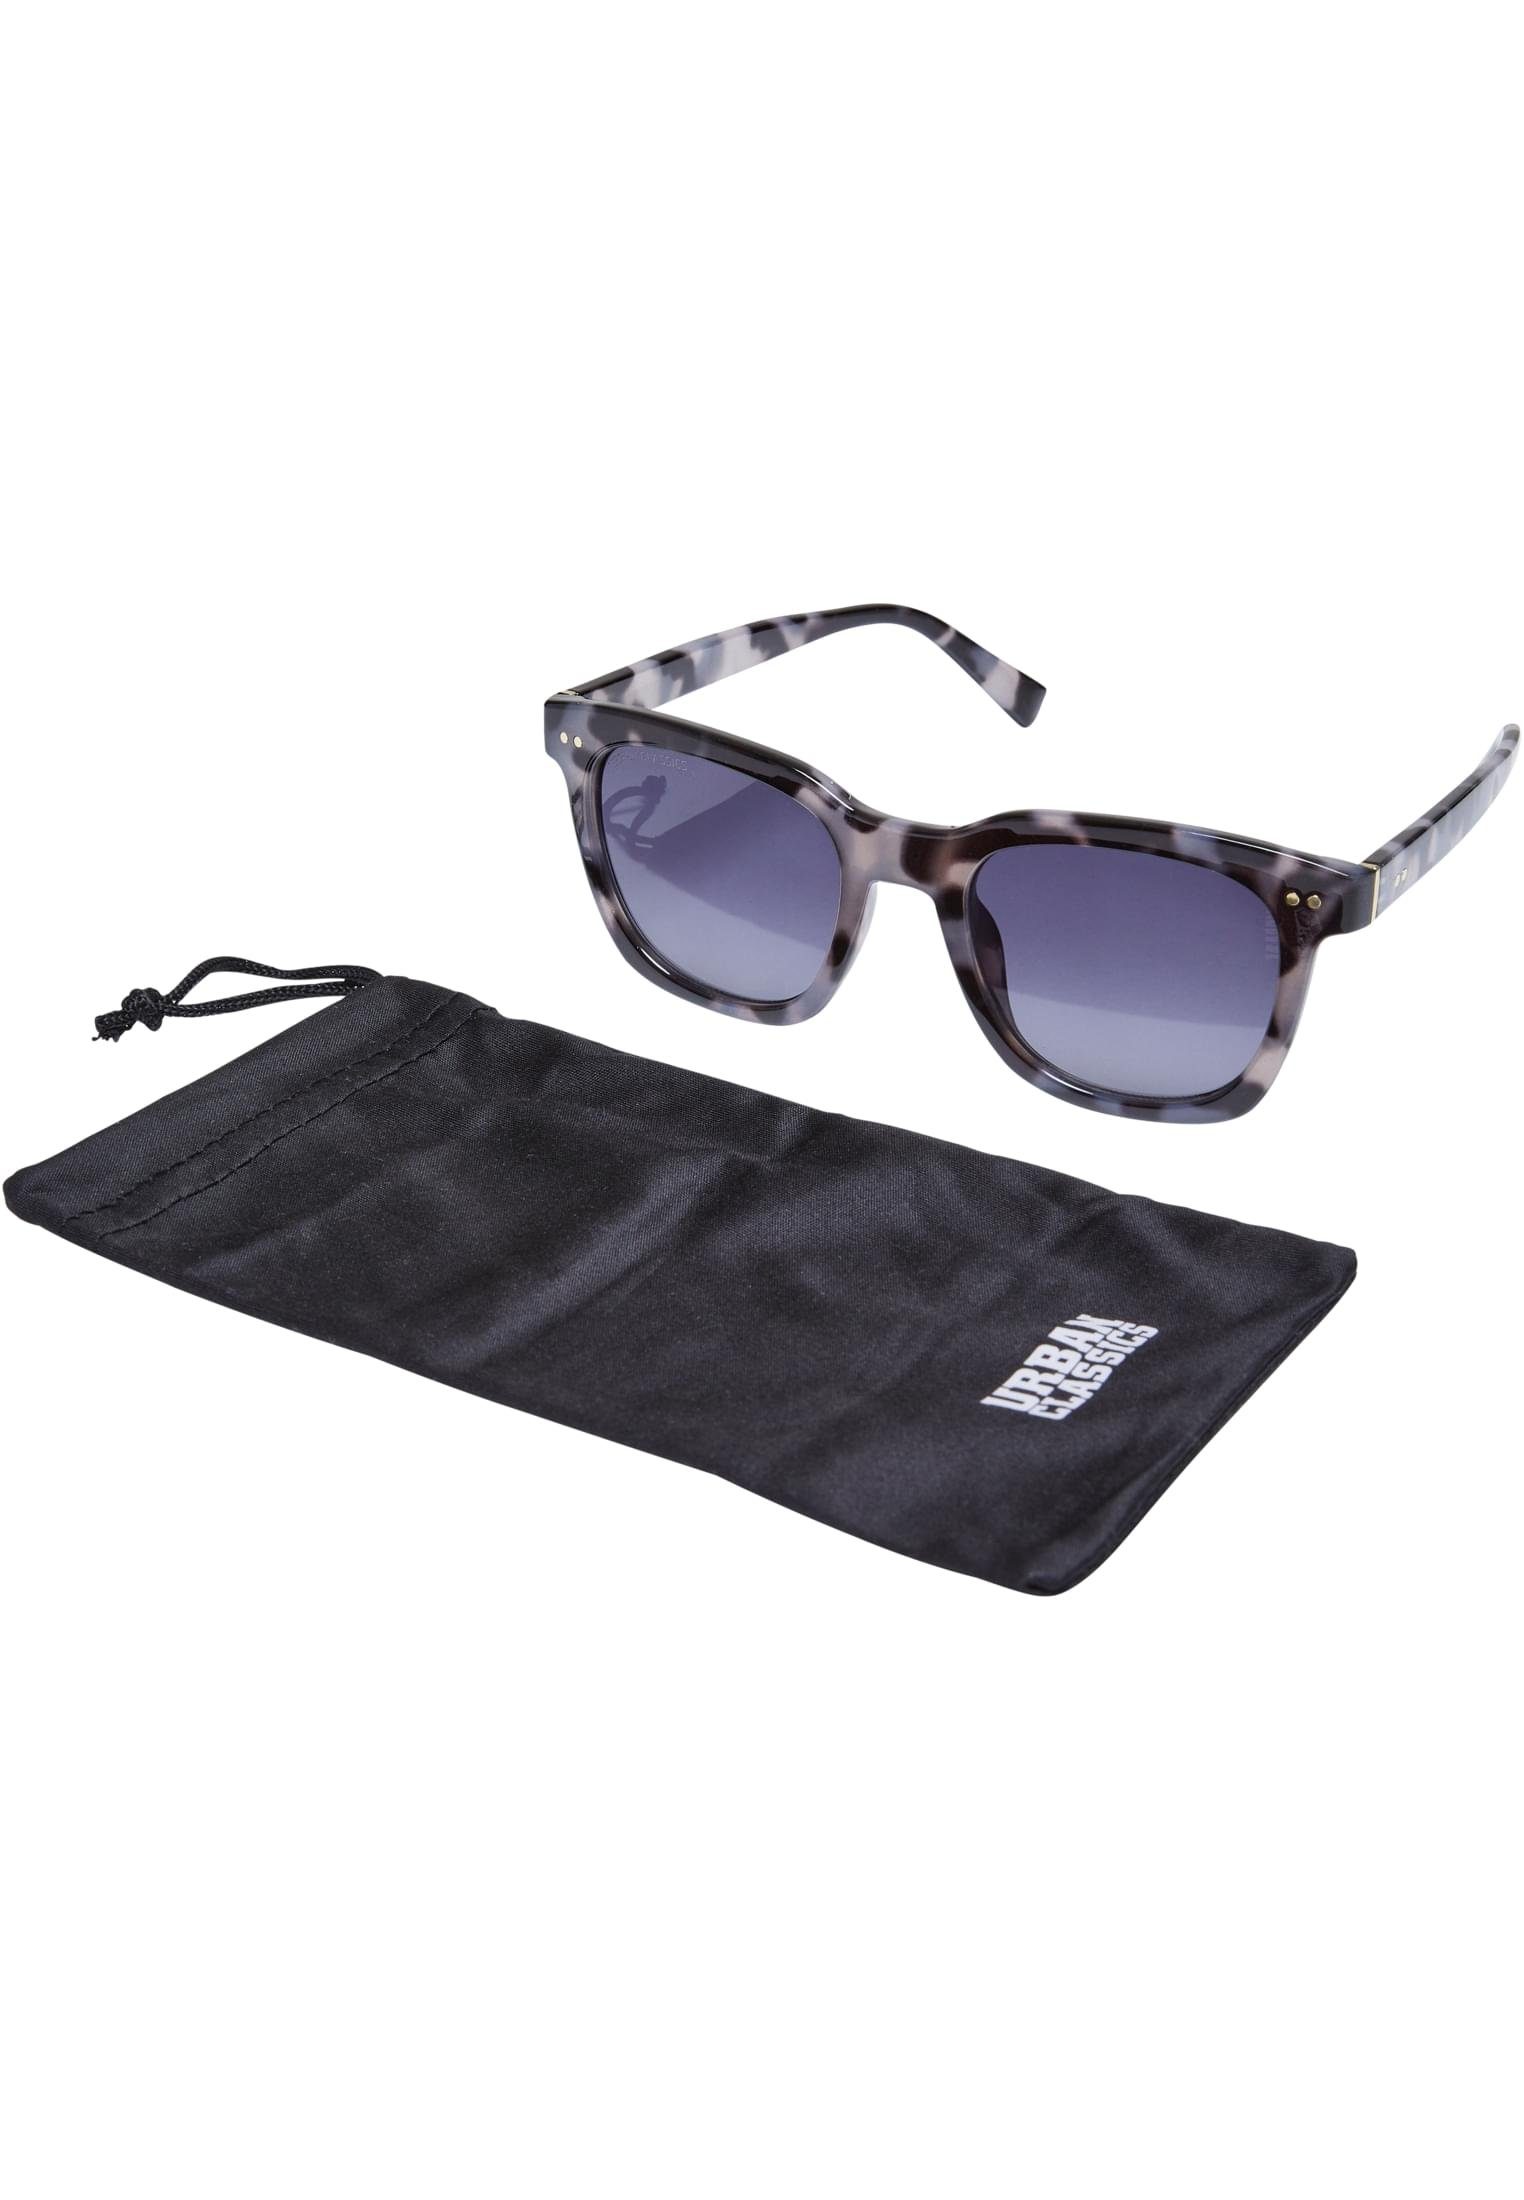 URBAN CLASSICS Sonnenbrille Unisex Sunglasses Naples amber/black